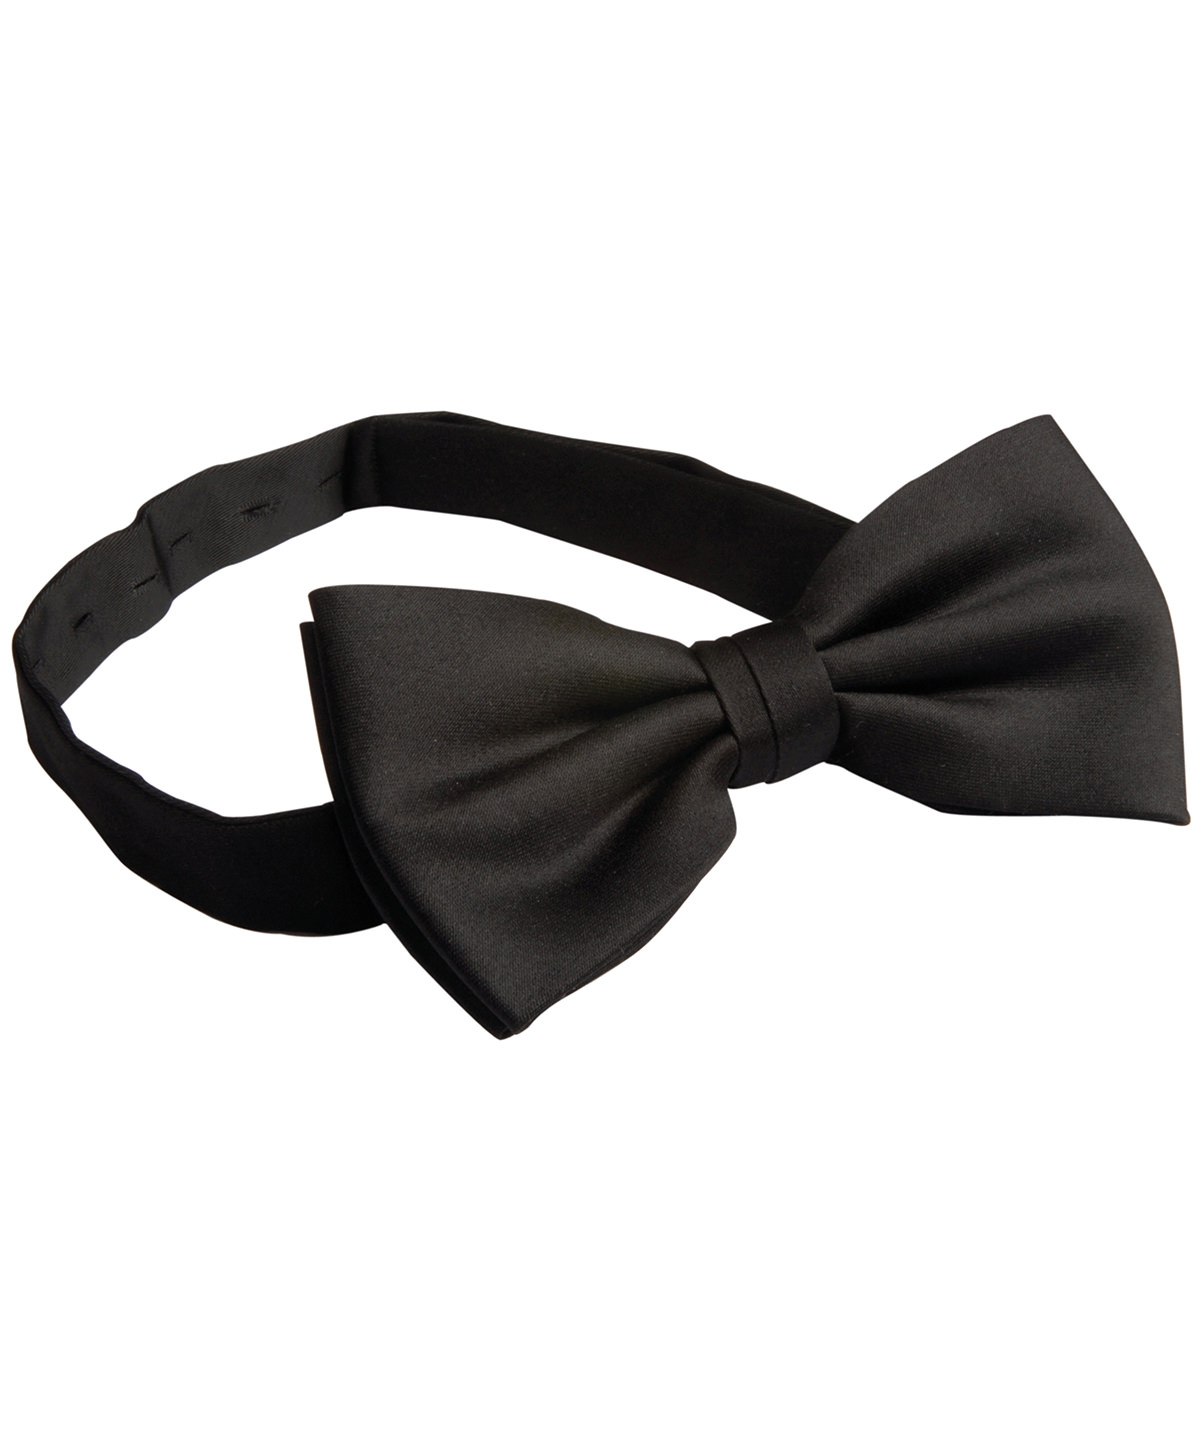 Bow Tie Black Size One Size